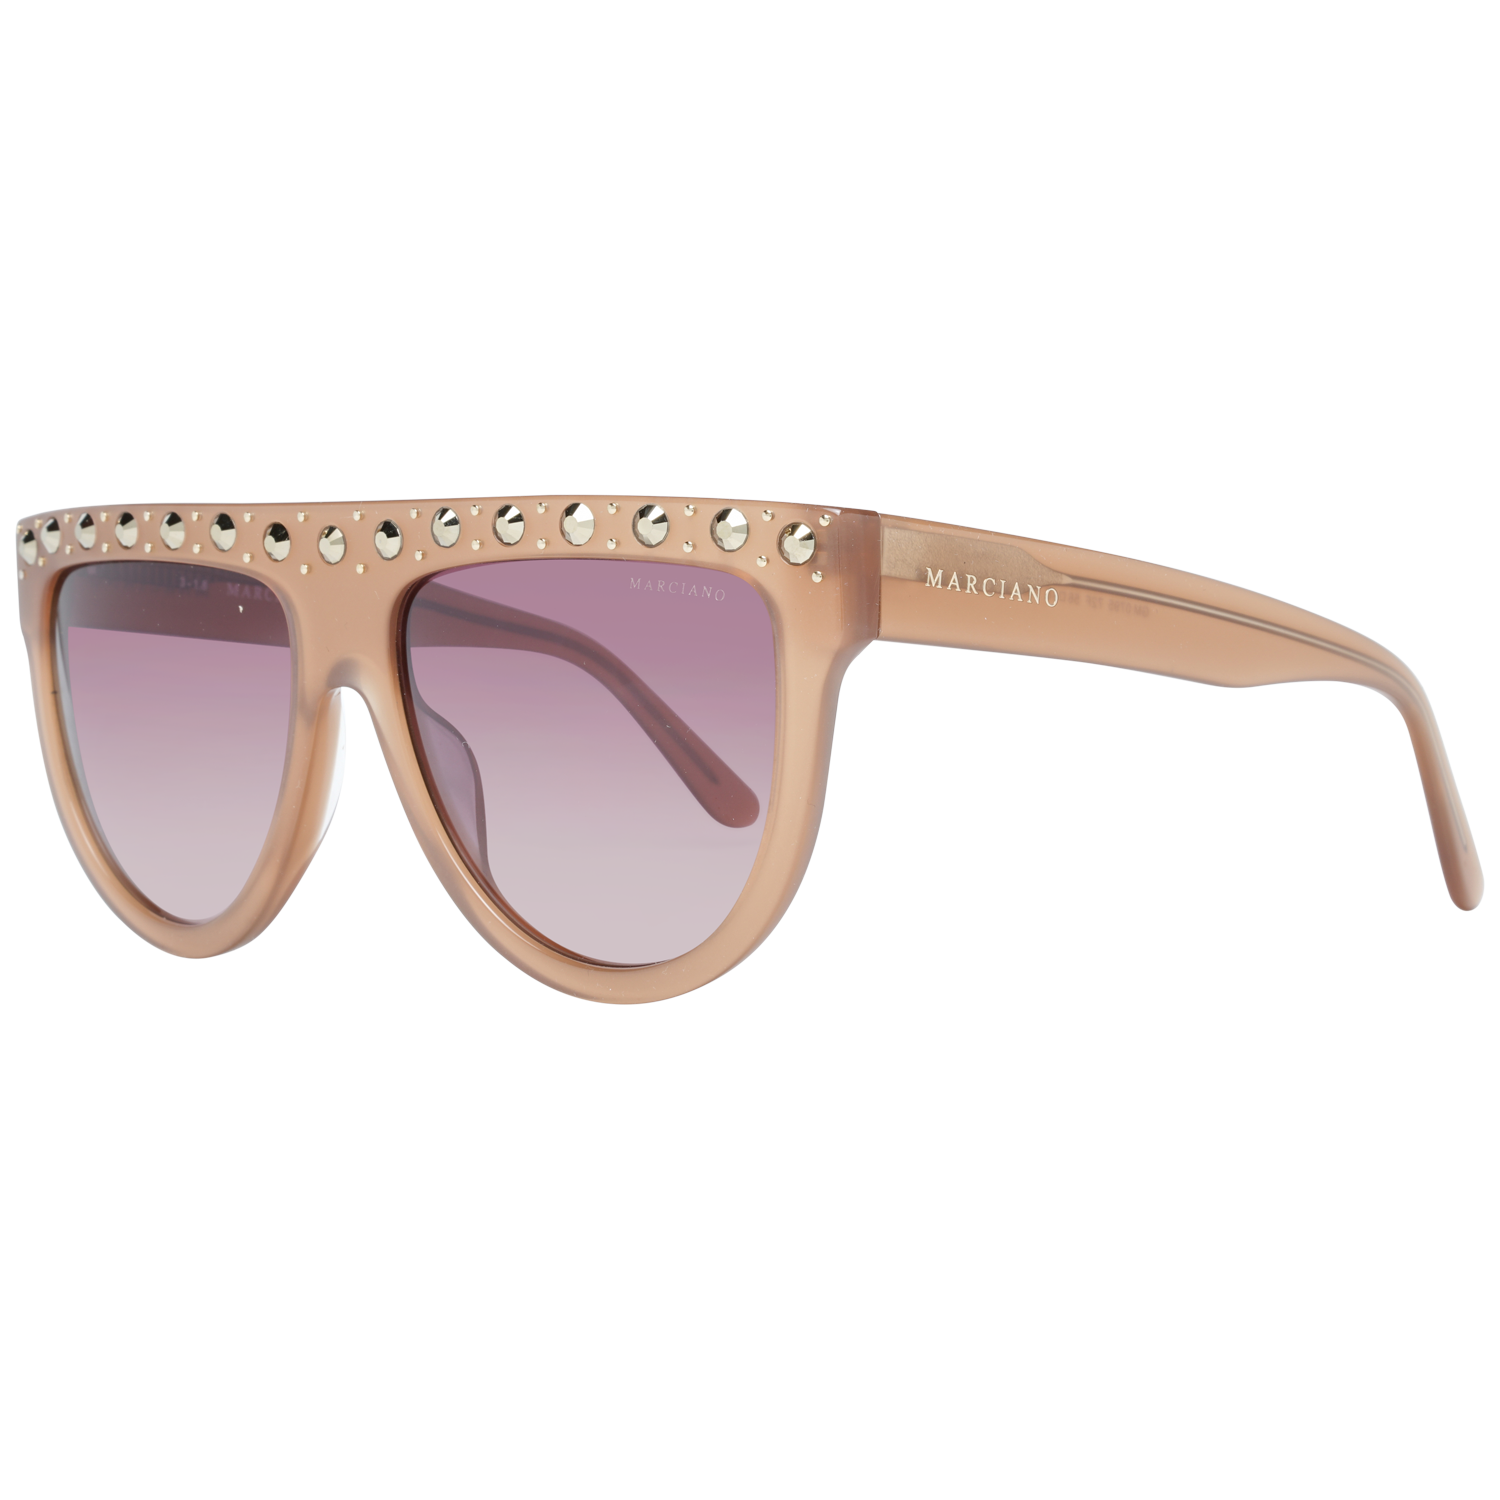 Marciano by Guess Sunglasses Marciano by Guess Sunglasses GM0795 72F 56 Eyeglasses Eyewear UK USA Australia 